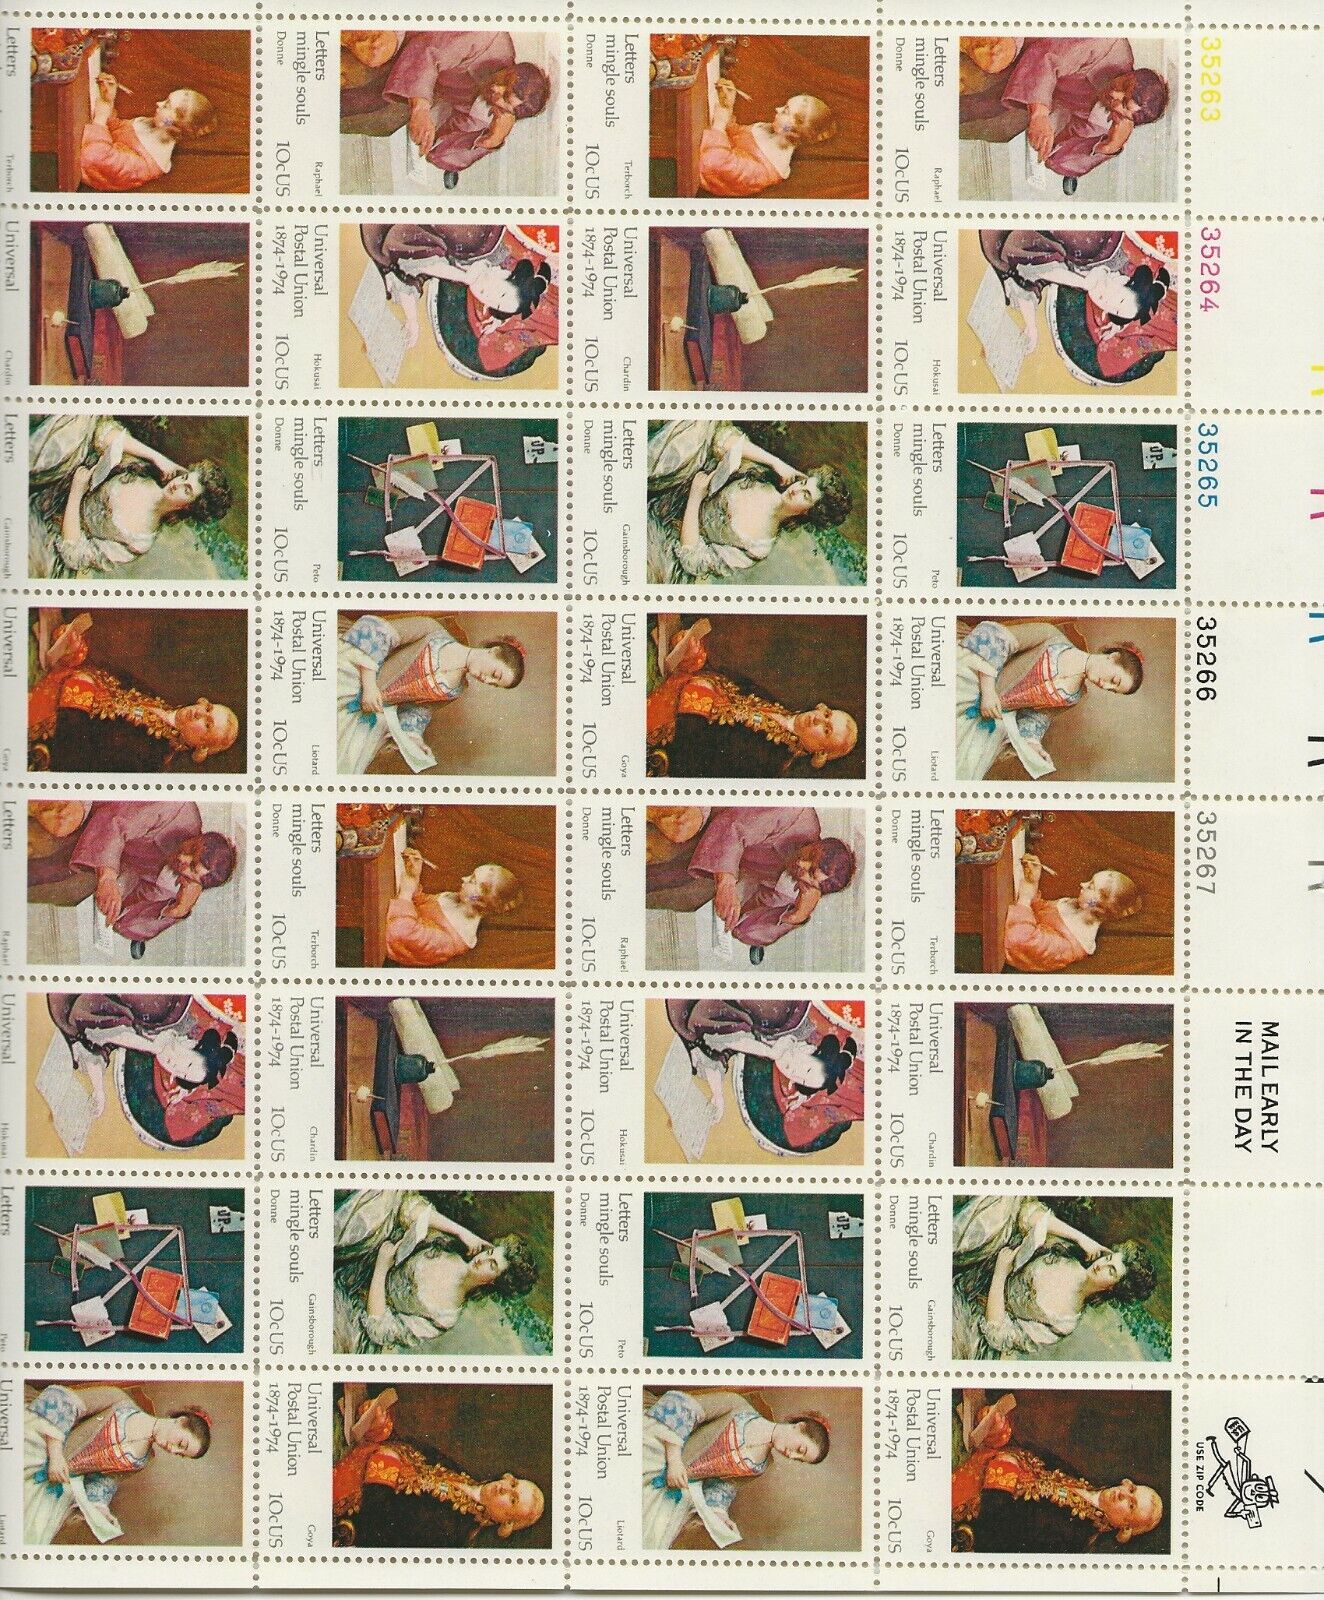 1974 10 Cent Upu Full Sheet Of 32 Scott #1530-1537, Mint Nh